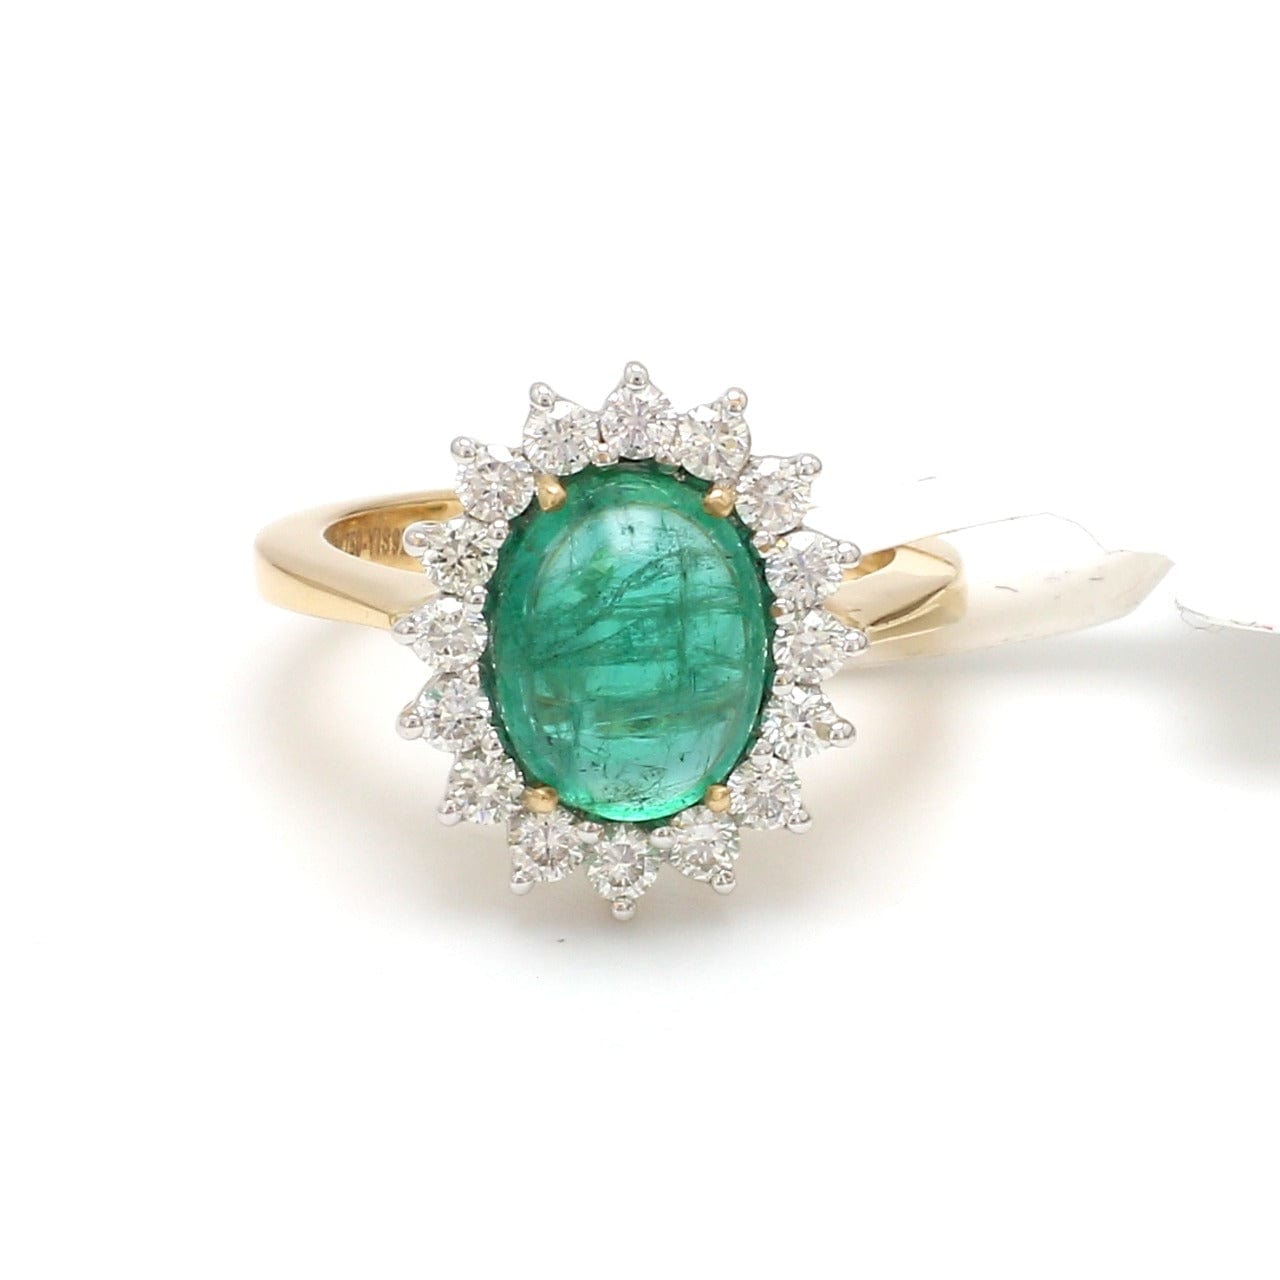 Details more than 163 wearing emerald ring benefits best - xkldase.edu.vn